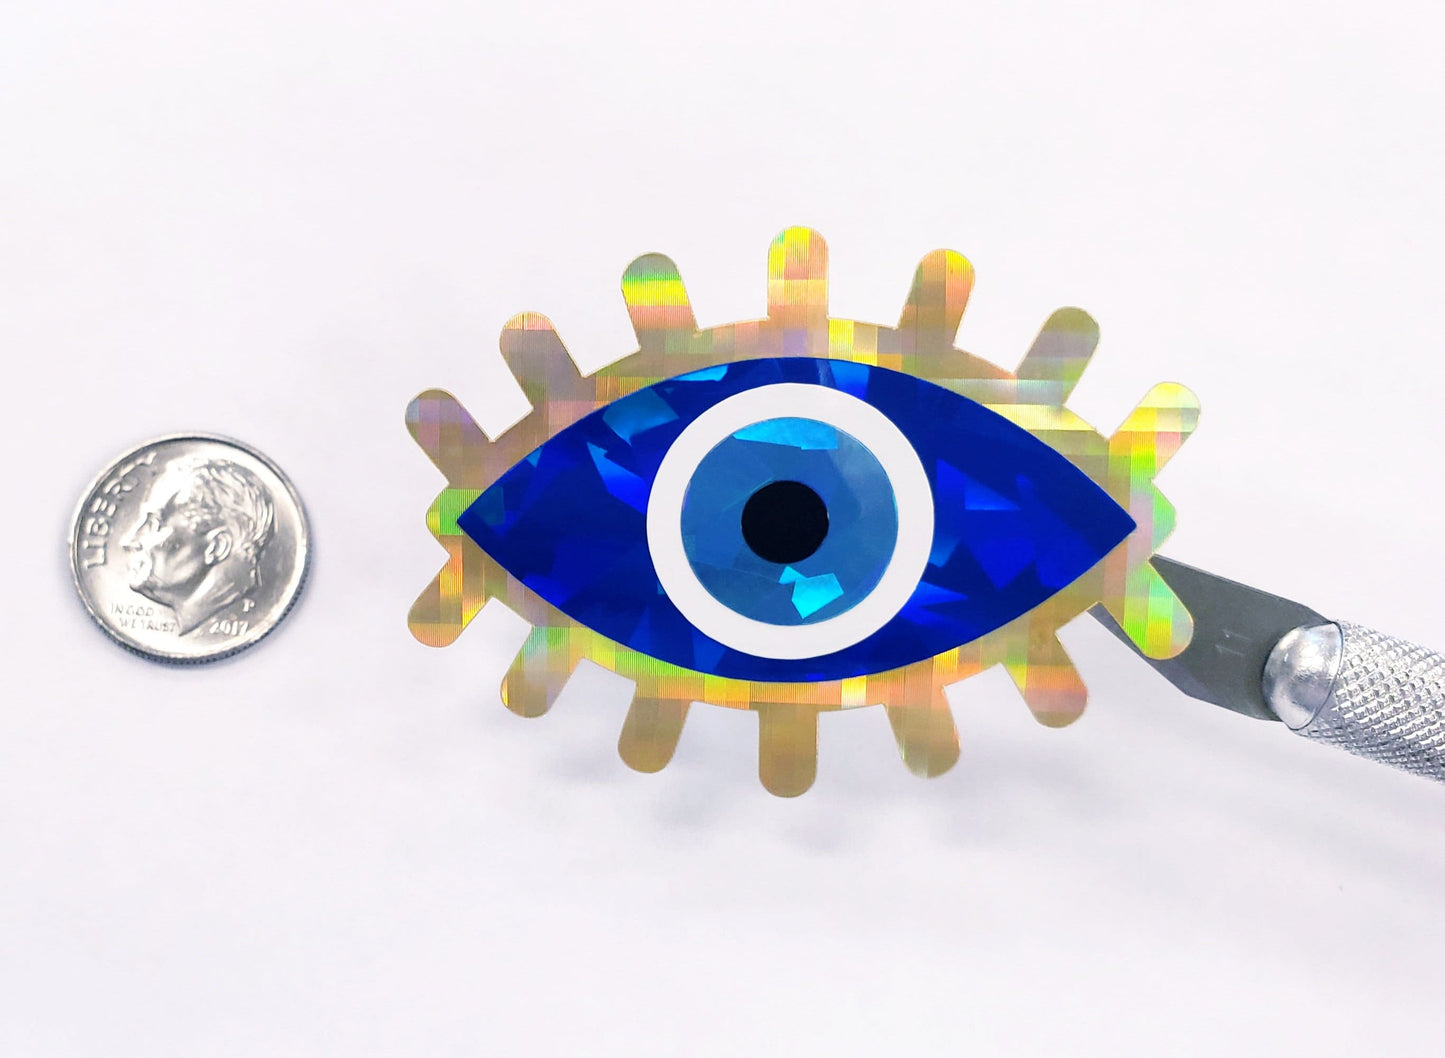 Evil Eye Stickers, set of 8 blue eye sparkly vinyl decals, good luck spiritual protection symbol, karma charm, third eye stickers